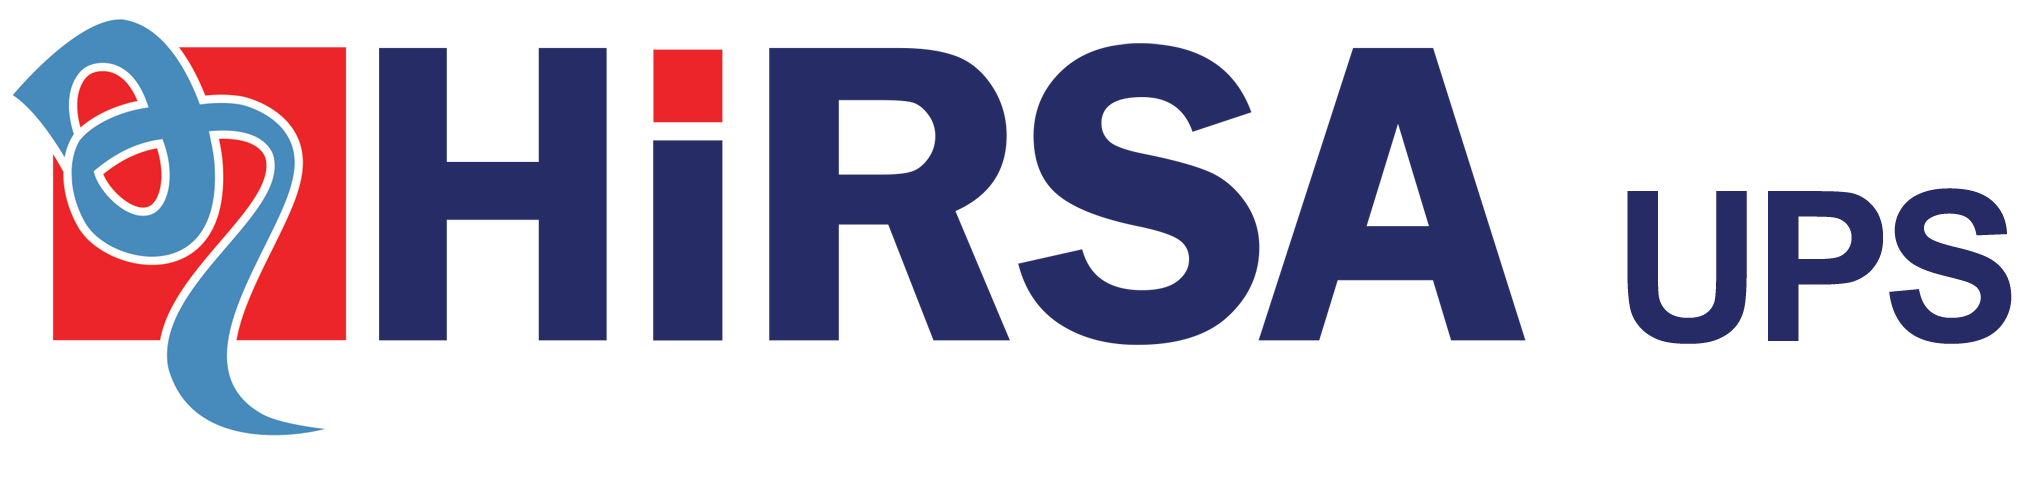 Hirsa logo | پرتوان هیرسا | لوگو